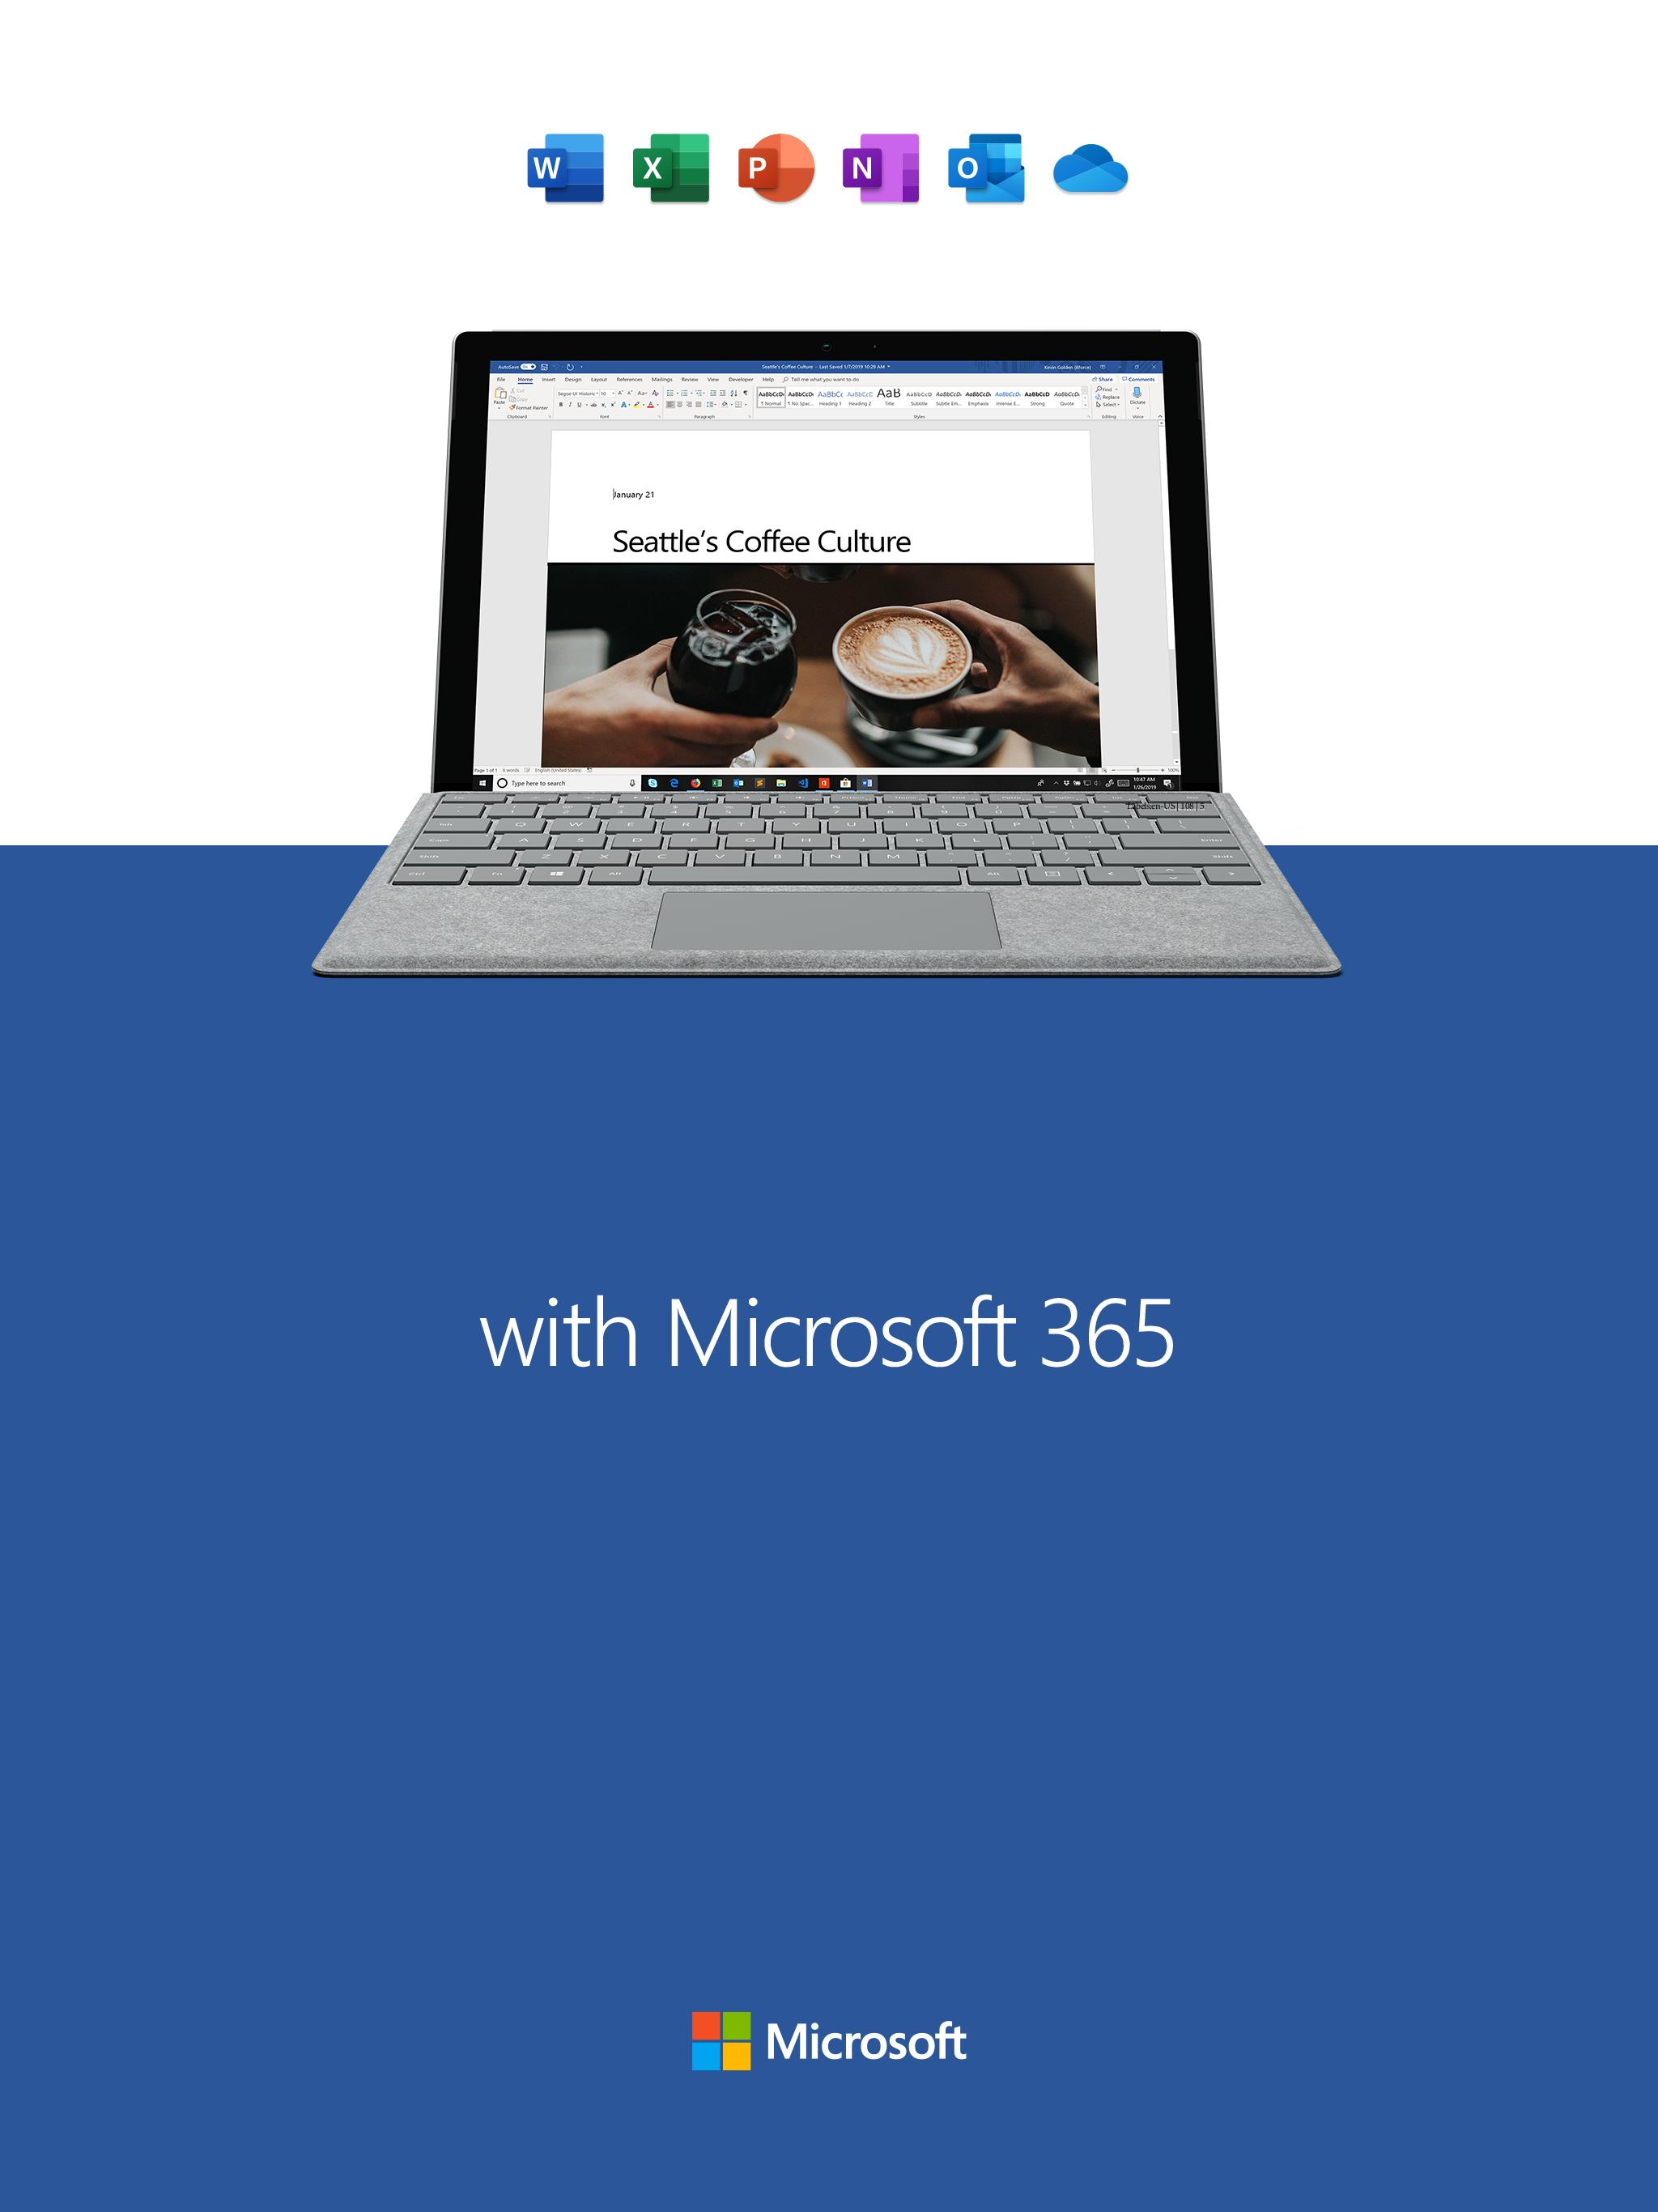 Microsoft Word: Write, Edit & Share Docs on the Go 16.0.13426.20196 Screenshot 15